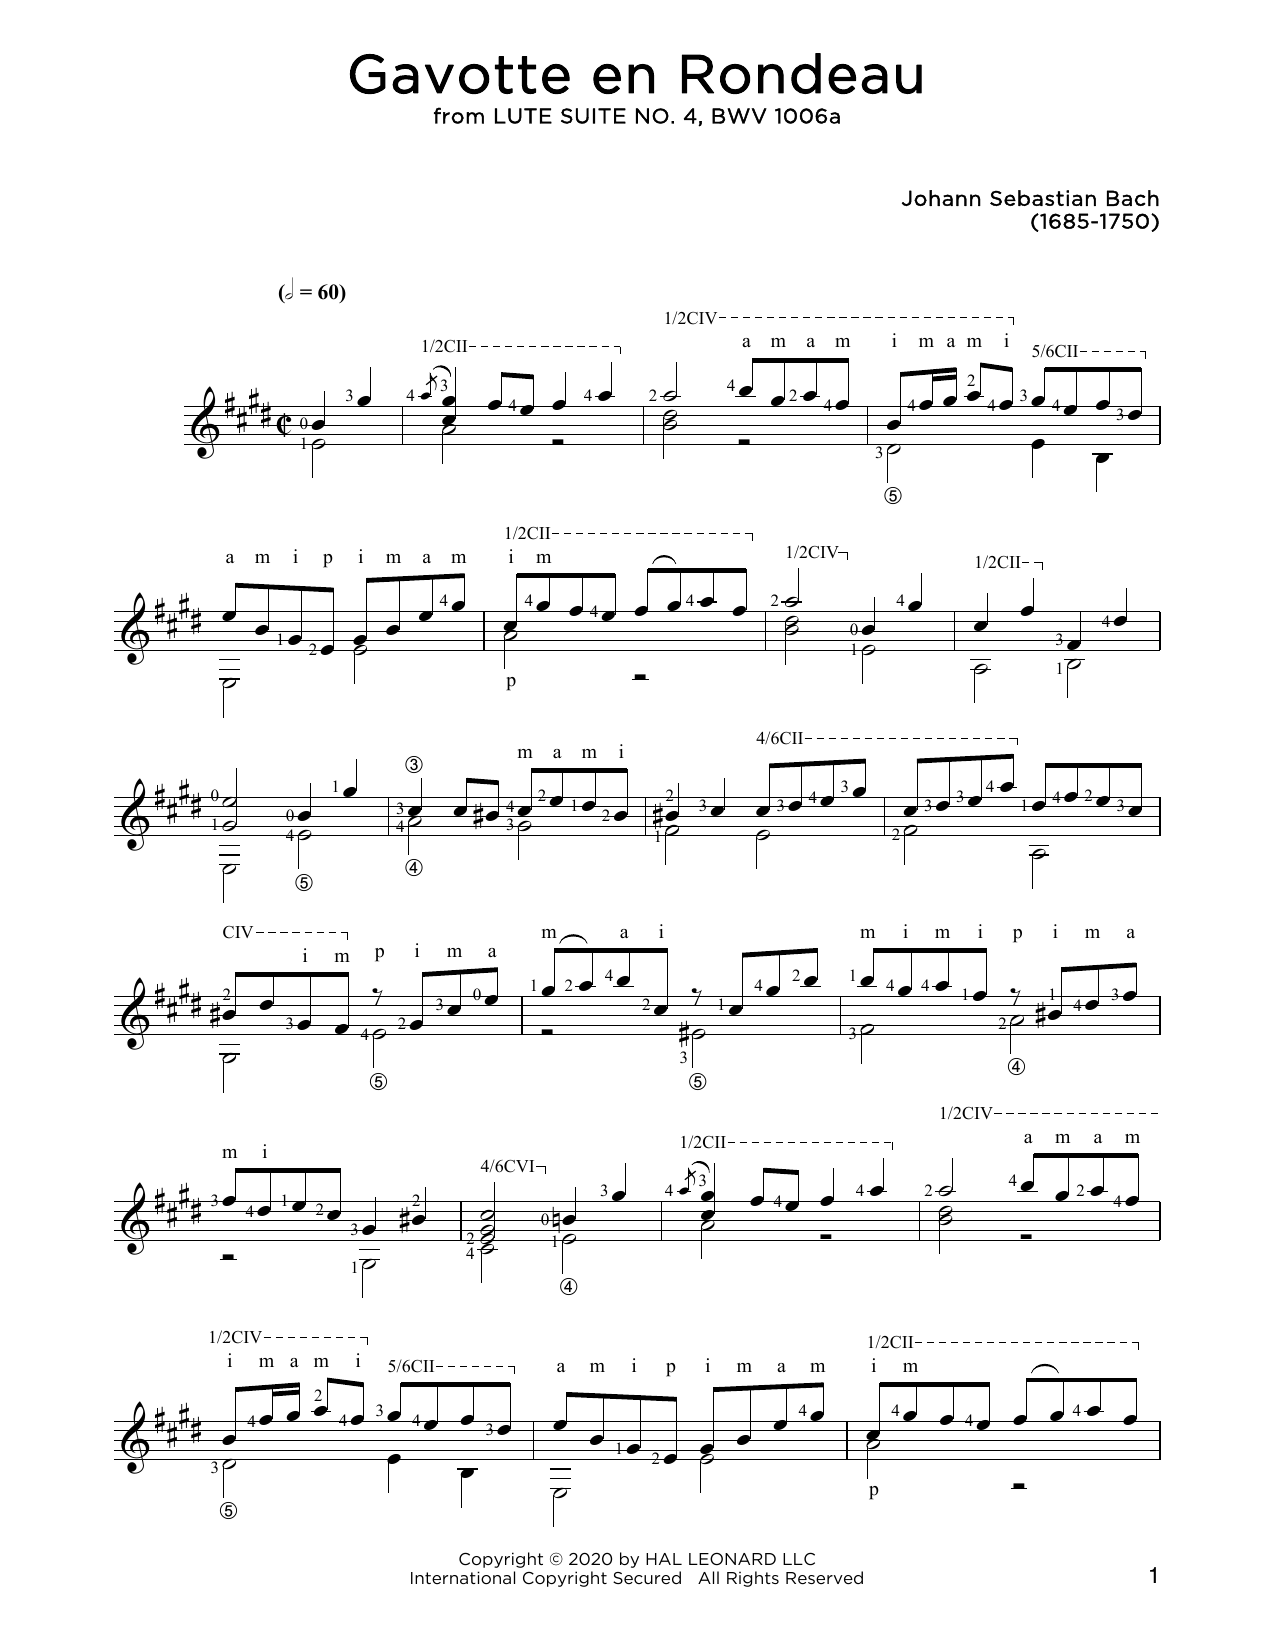 Download Johann Sebastian Bach Gavotte En Rondeau Sheet Music and learn how to play Solo Guitar PDF digital score in minutes